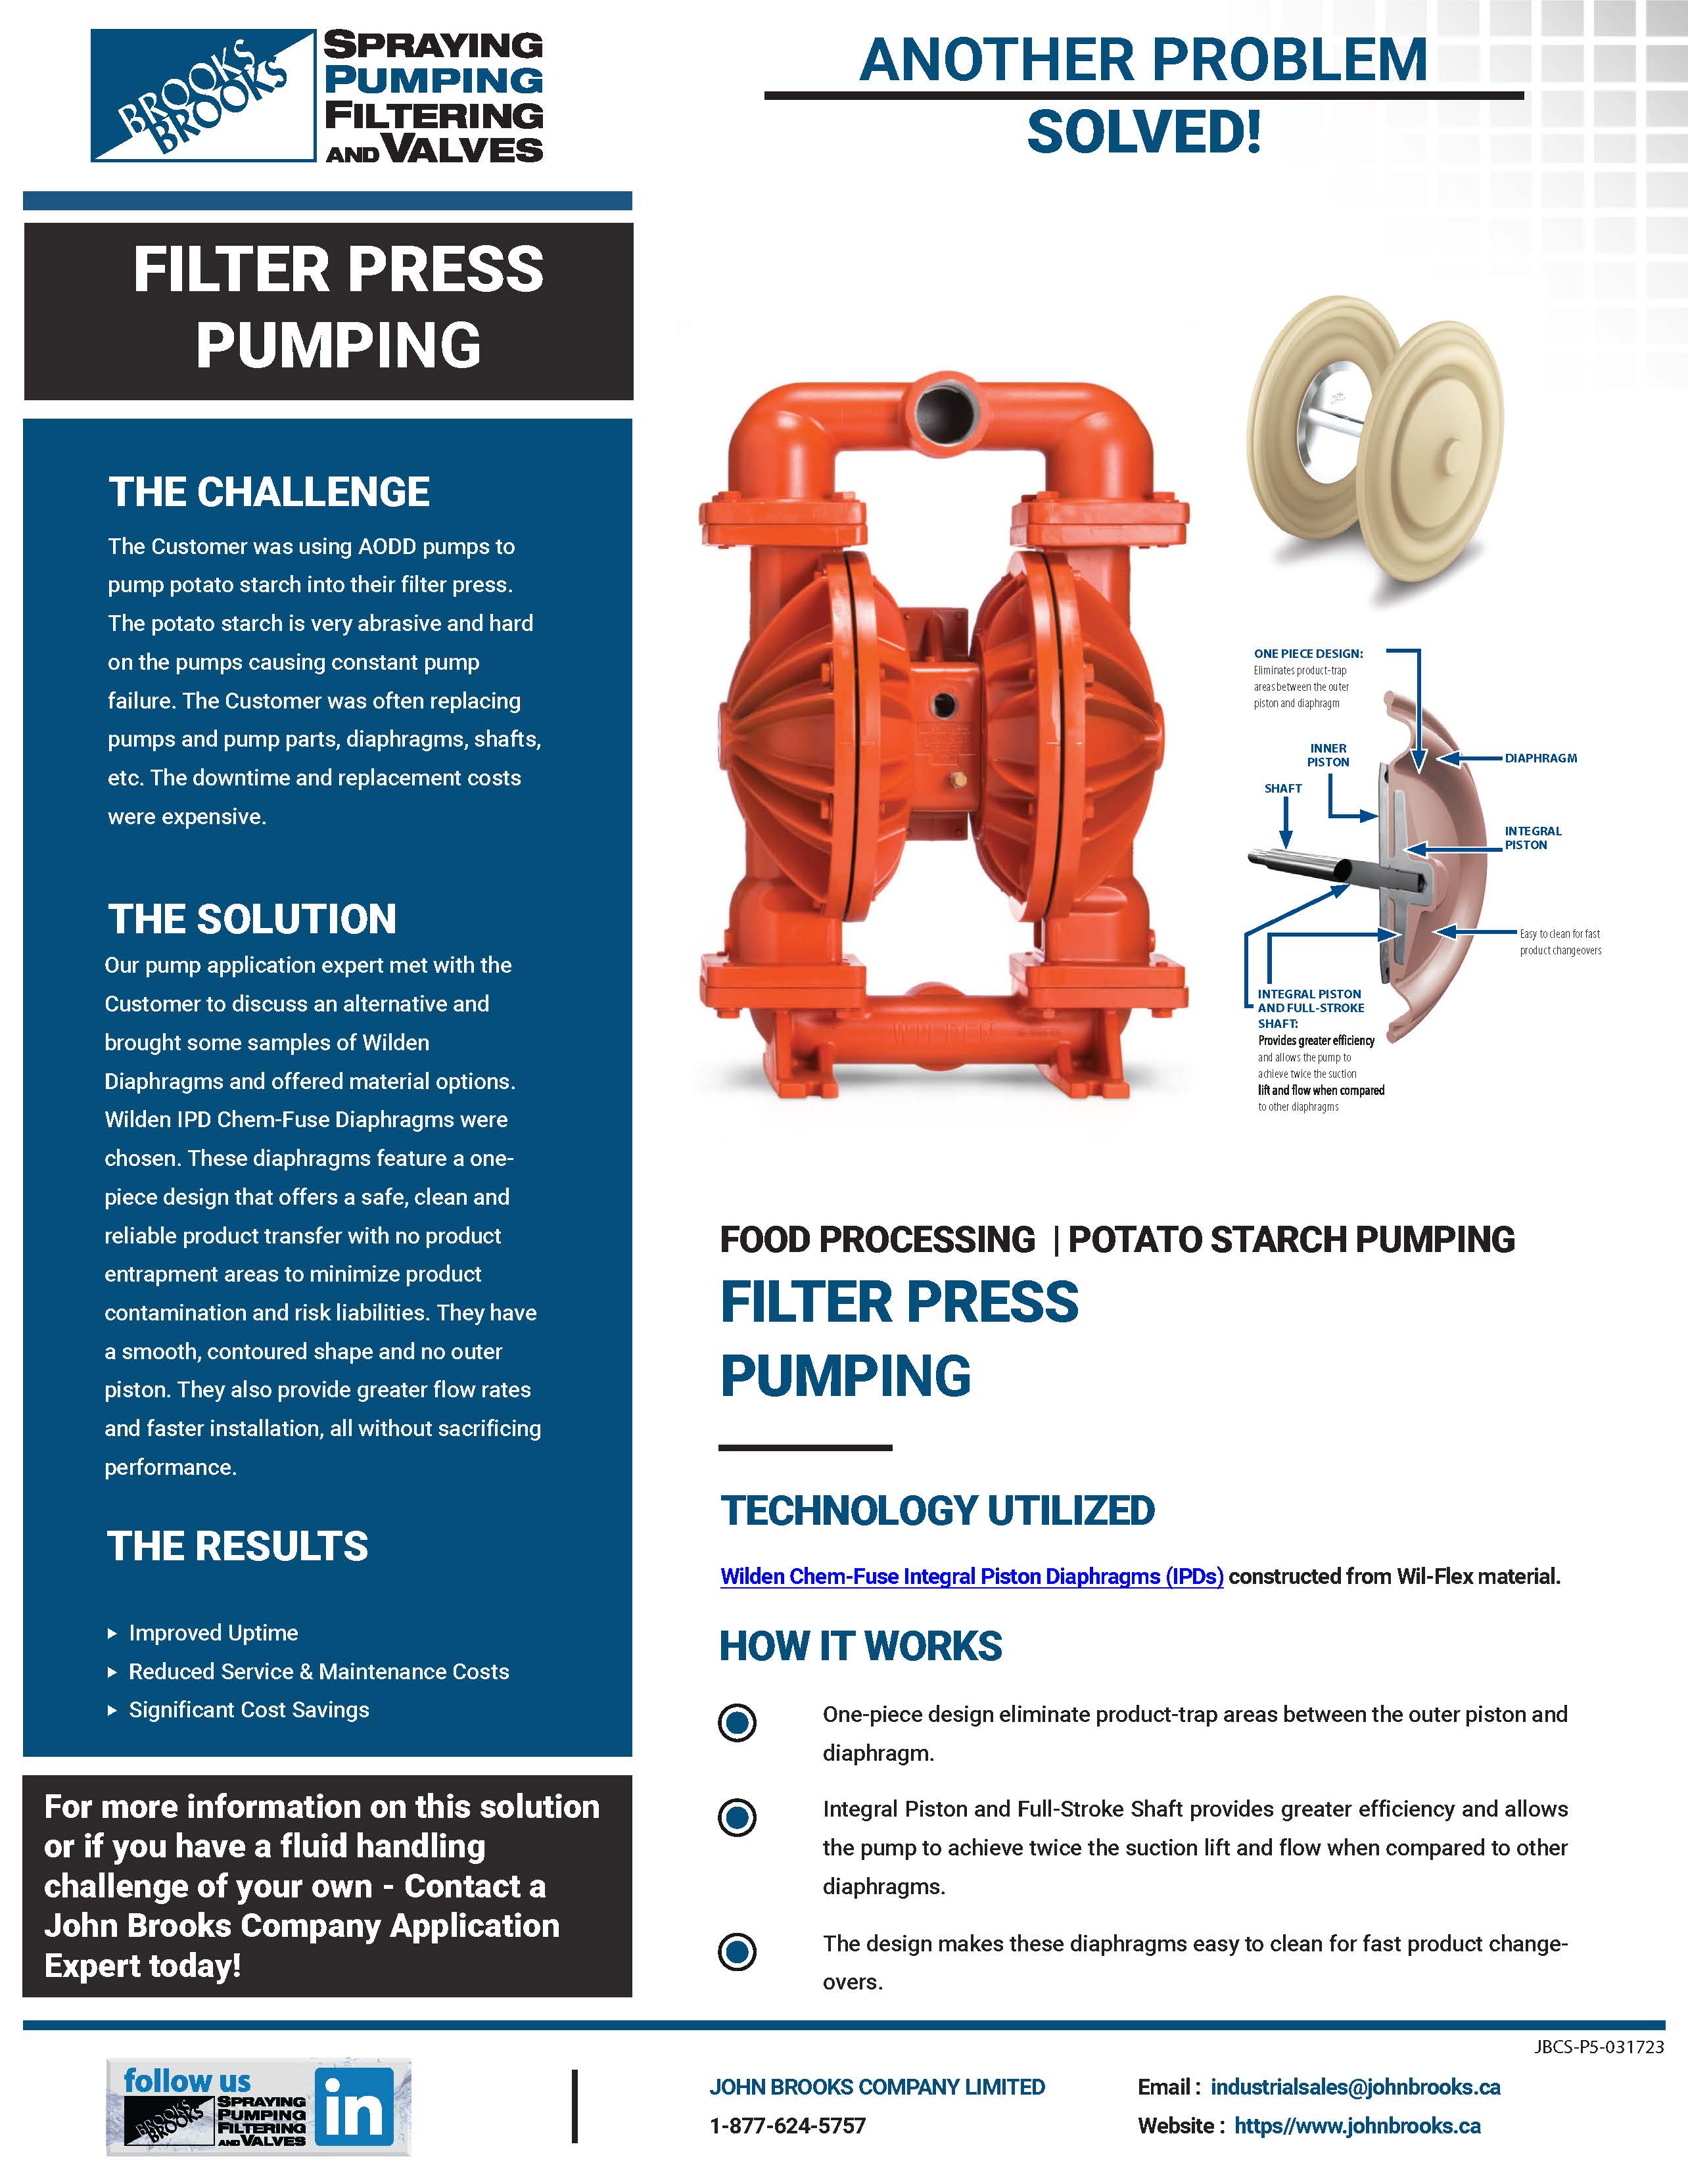 Wilden Chem-Fuse Diaphragm Pumps for Filter Press Pumping